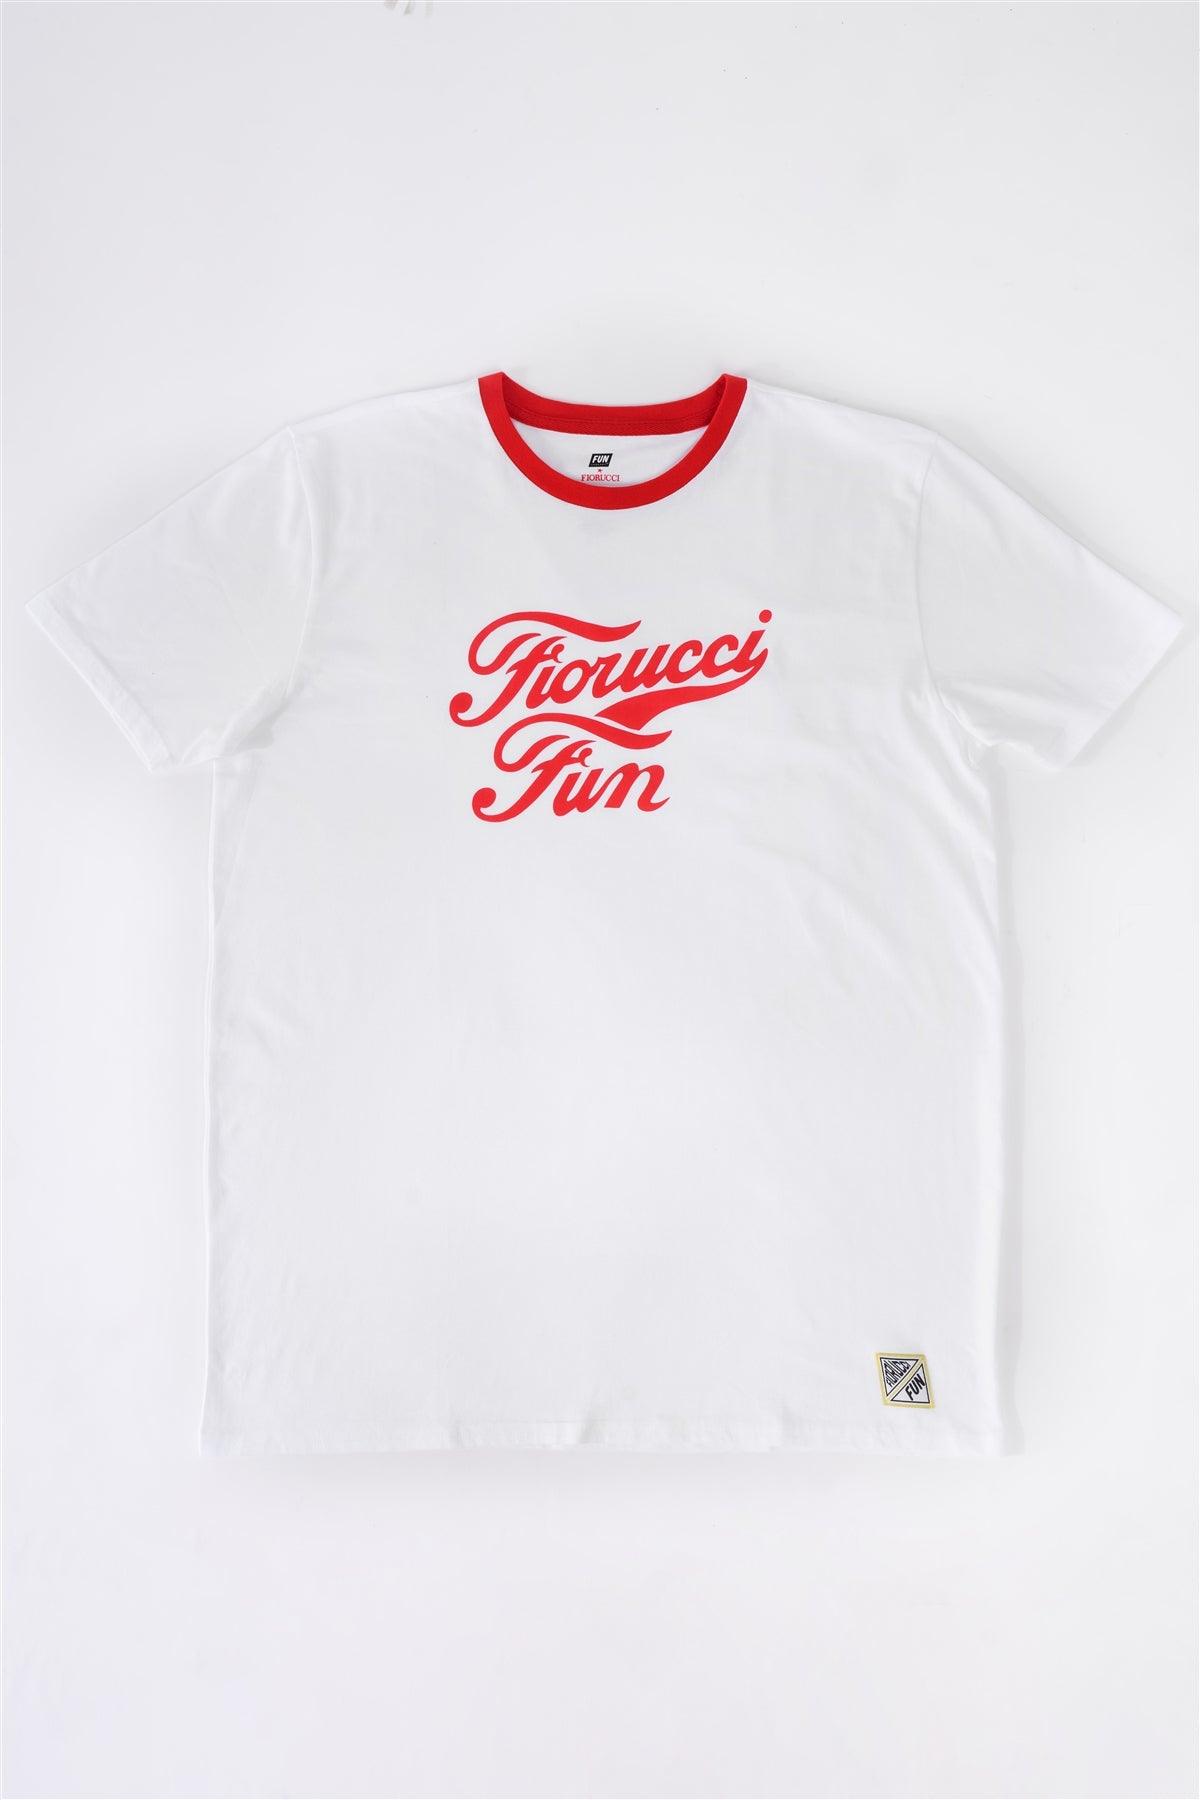 Fiorucci Fun Men's White & Red Printed Logo T-Shirt For Him